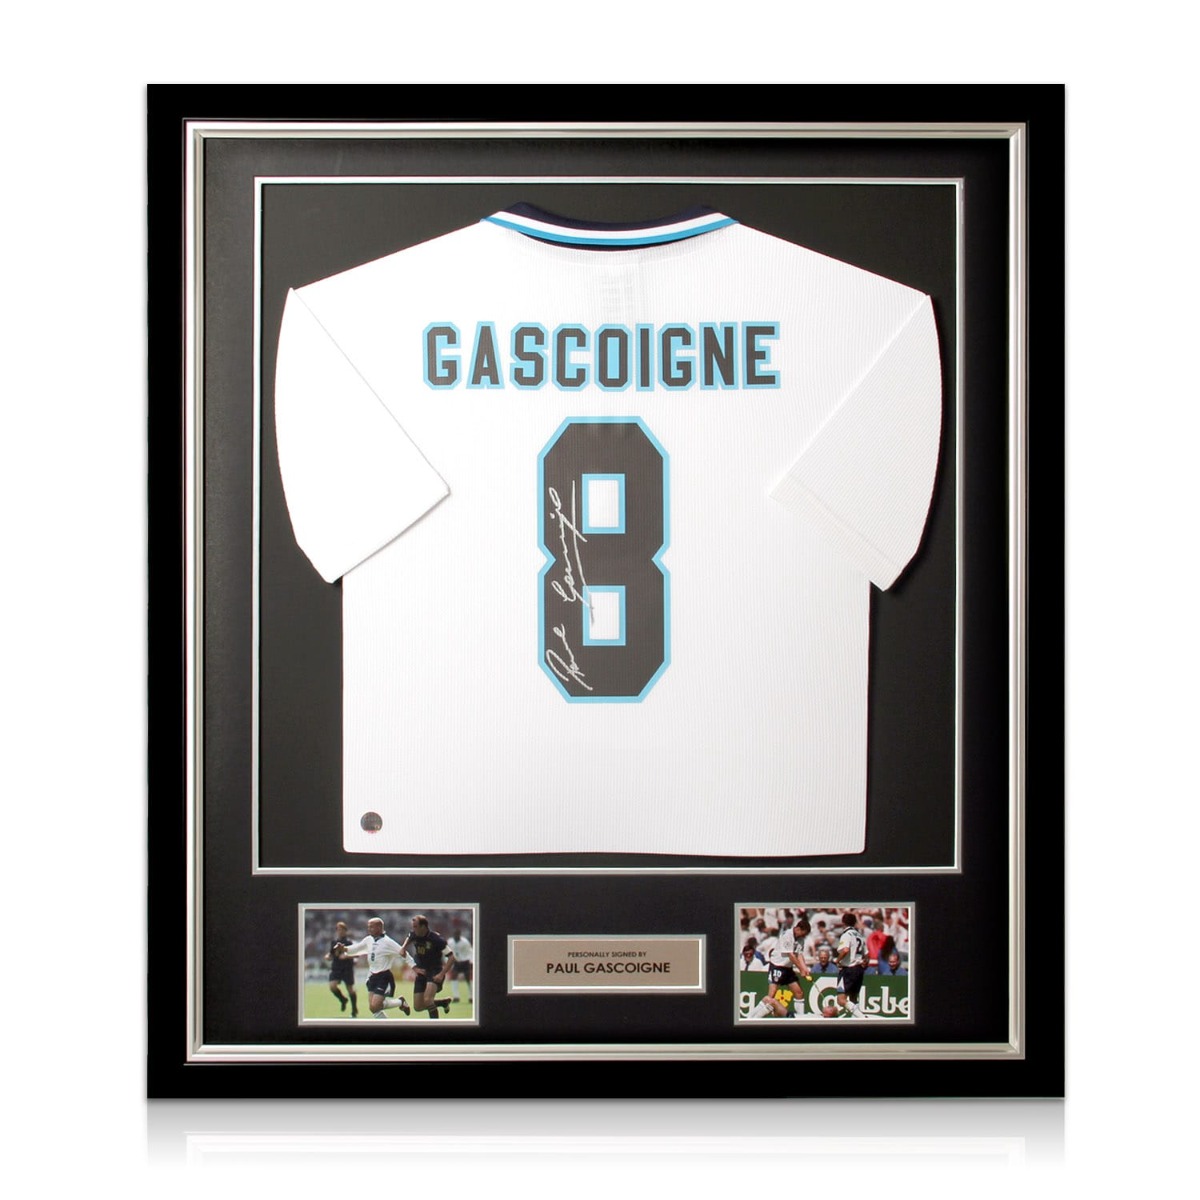 A Paul Gazza Gascoigne Signed Spurs Football Photograph in A Frame Presentation 